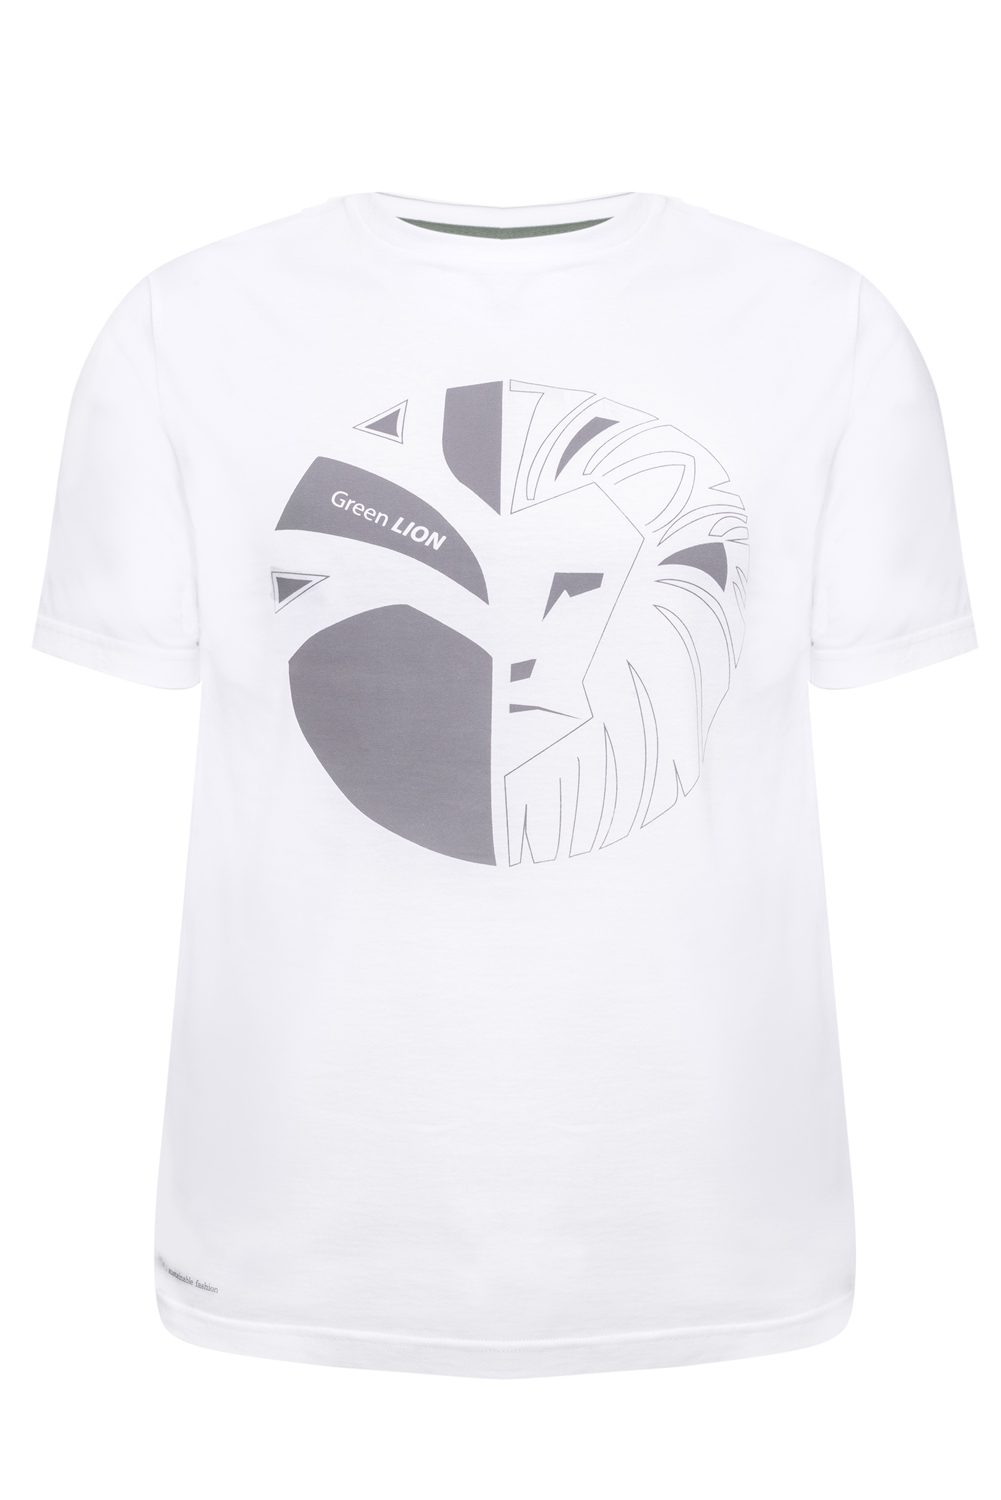 LÉO - T-shirt 100% Coton BIO - BLANC